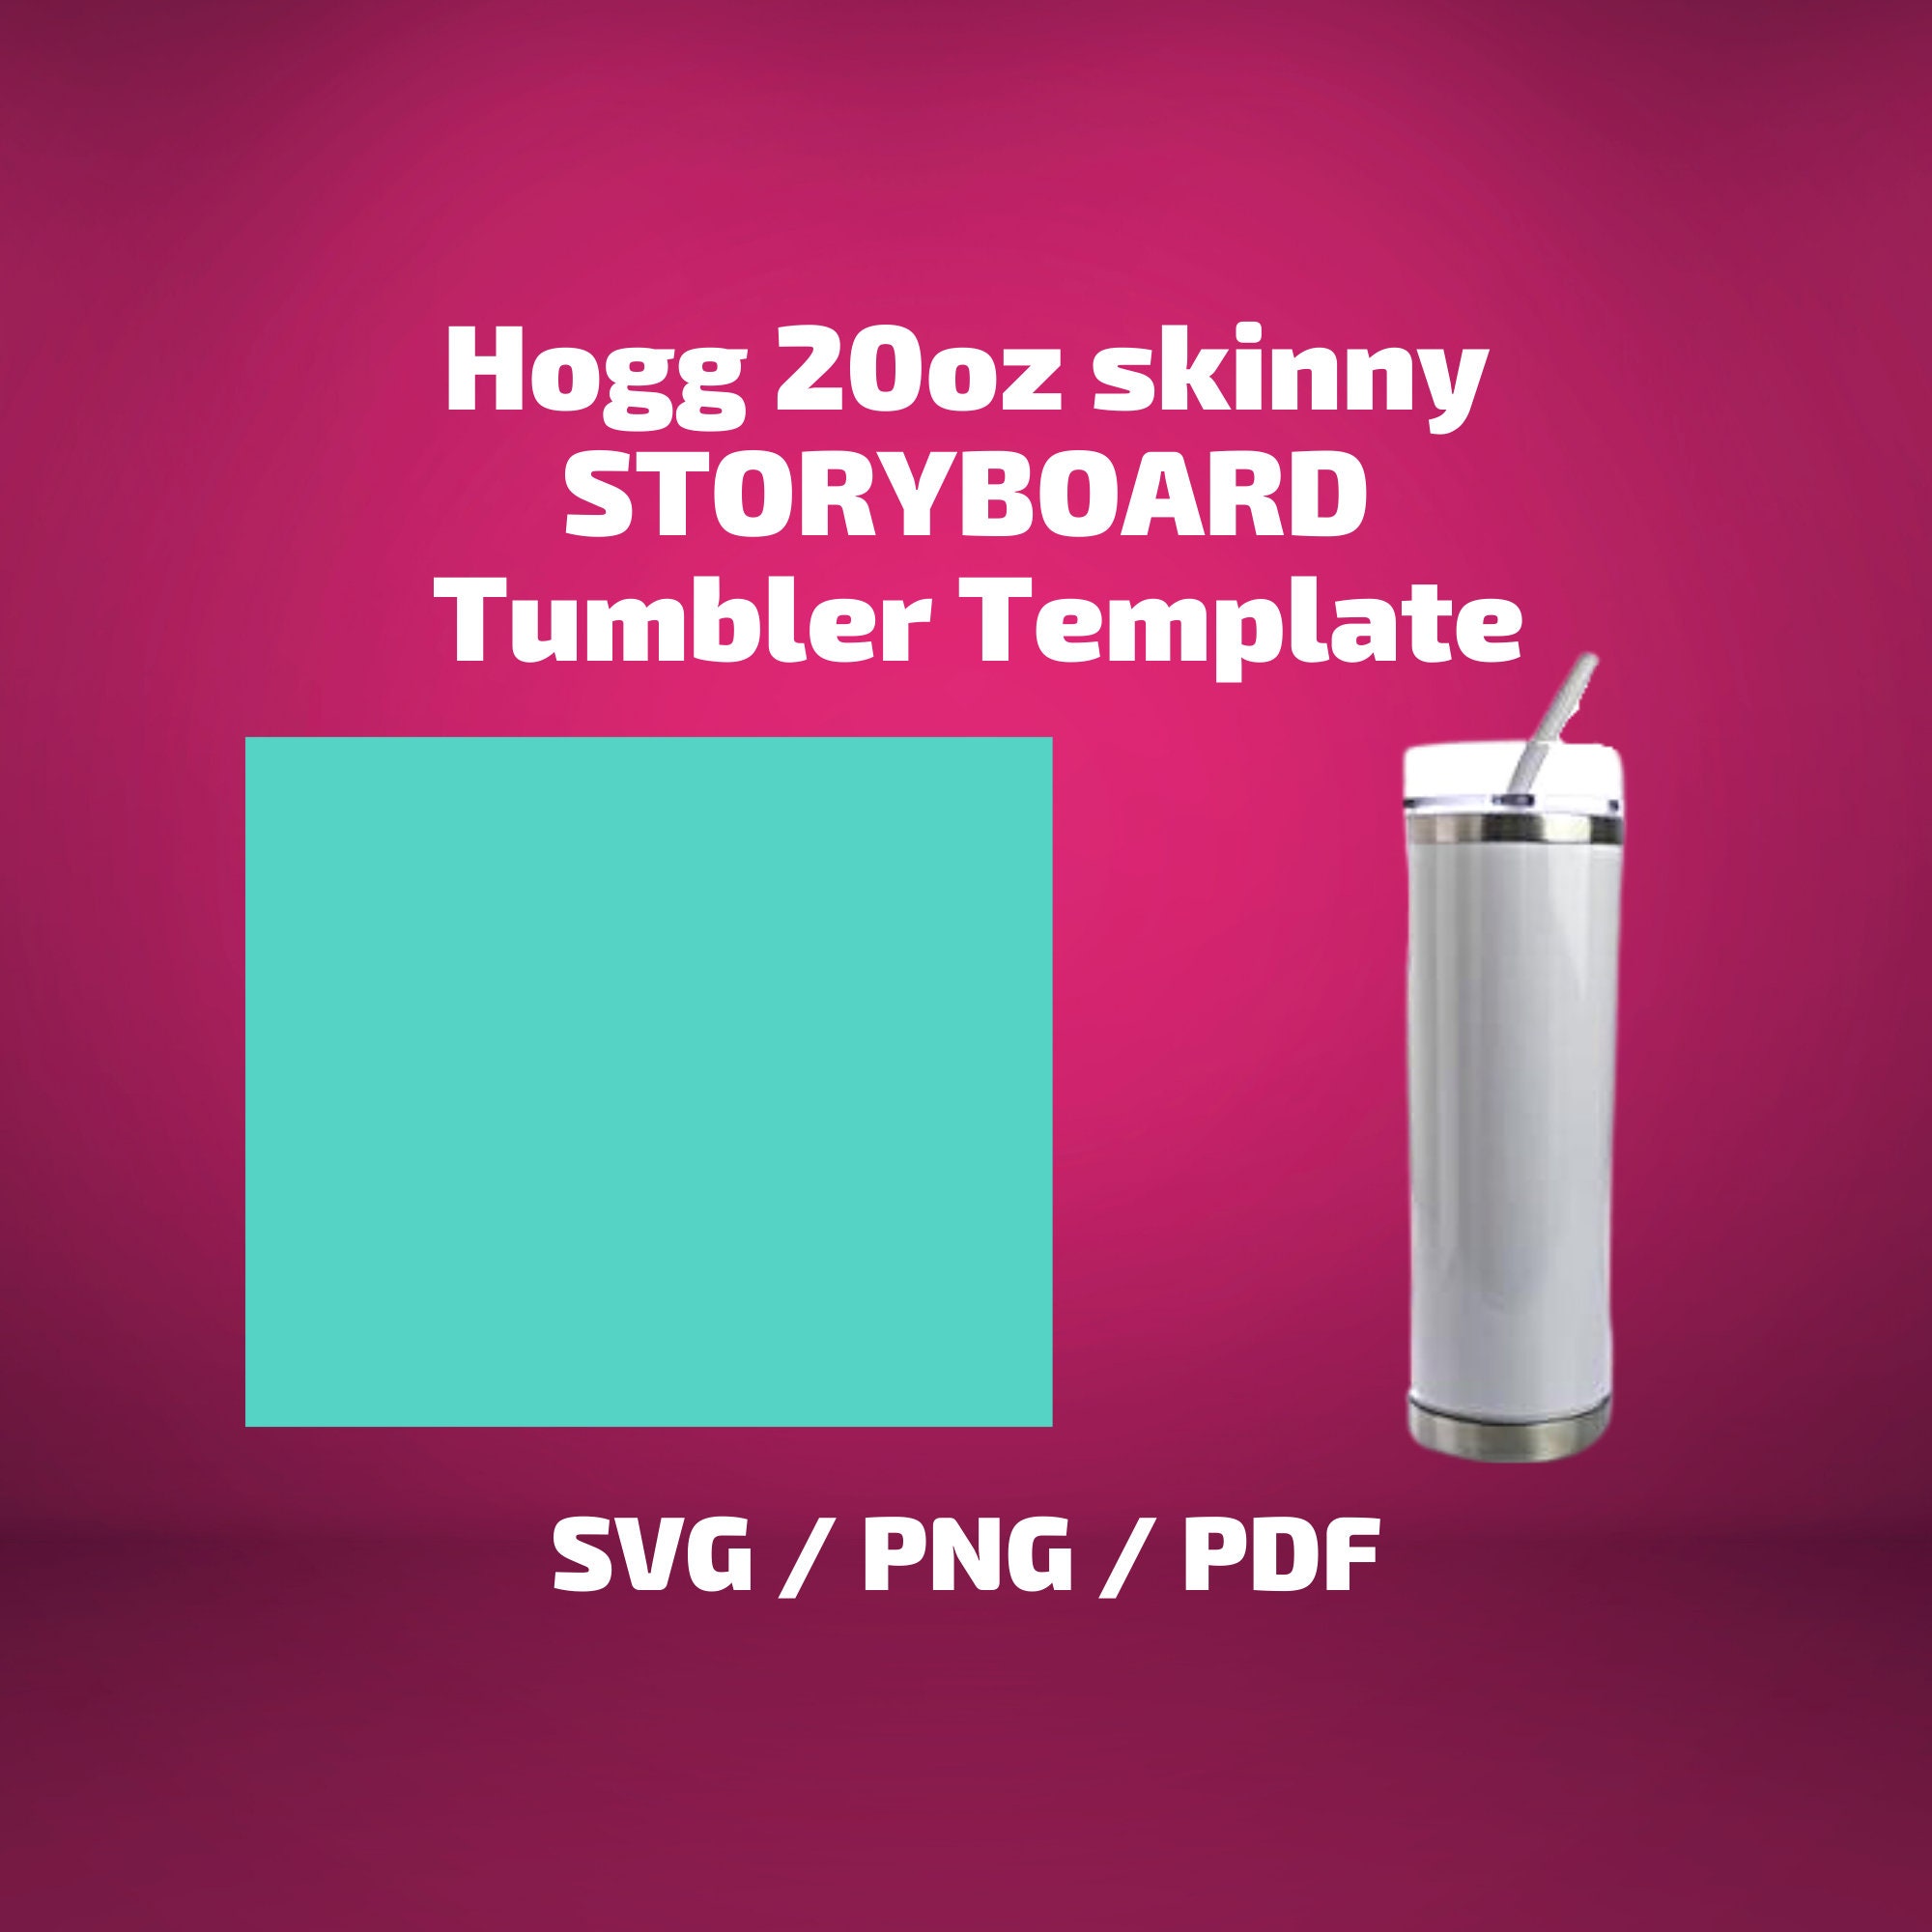 40oz Tumbler Template Full Wrap Sublimation (2535487)